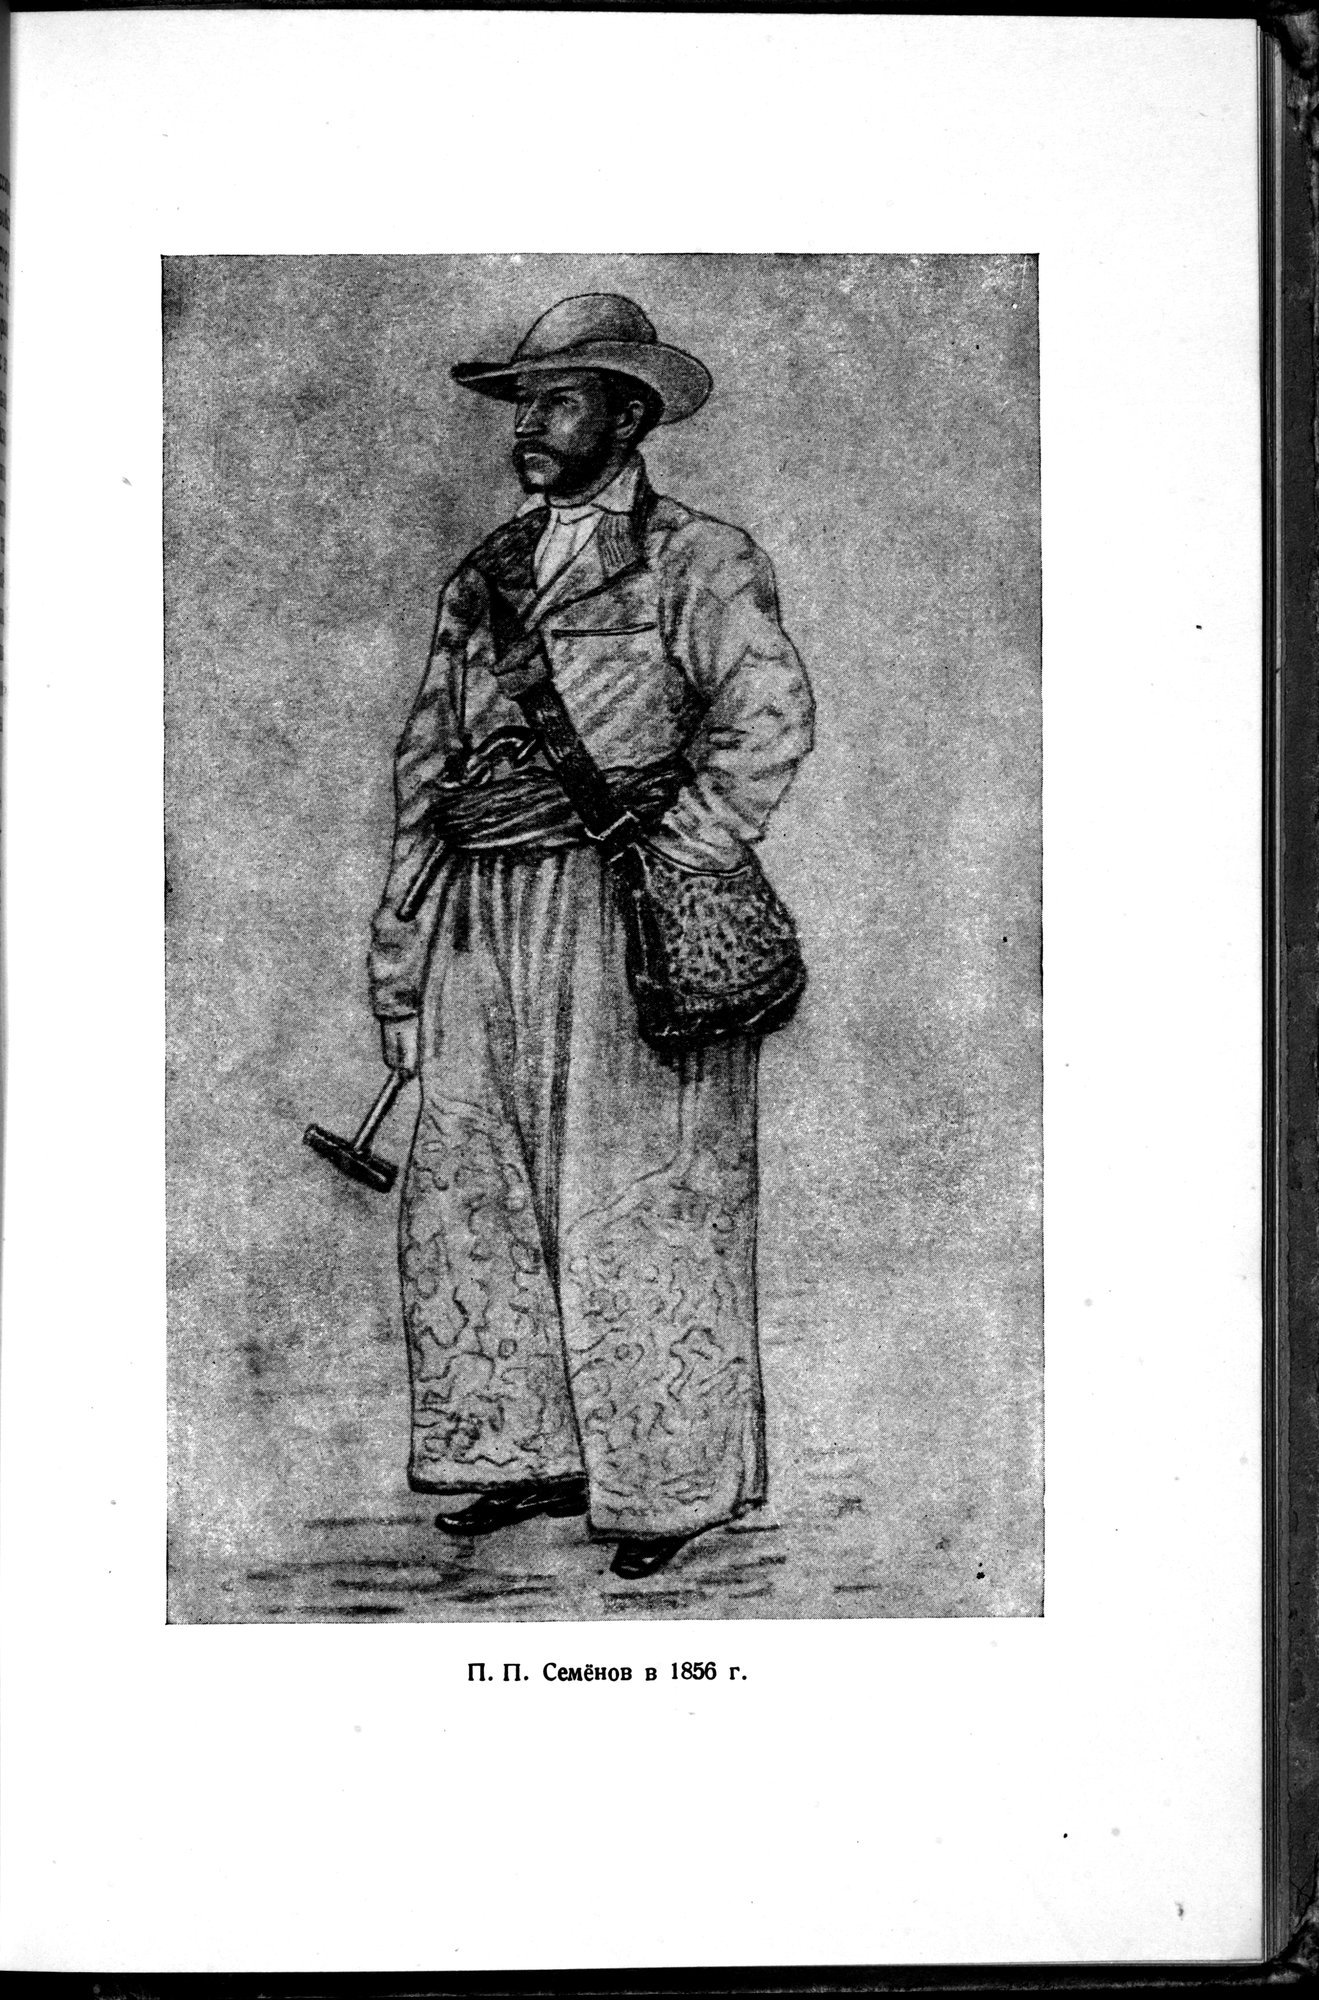 Puteshestvie v Tian' - Shan' v 1856-1857 godakh : vol.1 / Page 71 (Grayscale High Resolution Image)